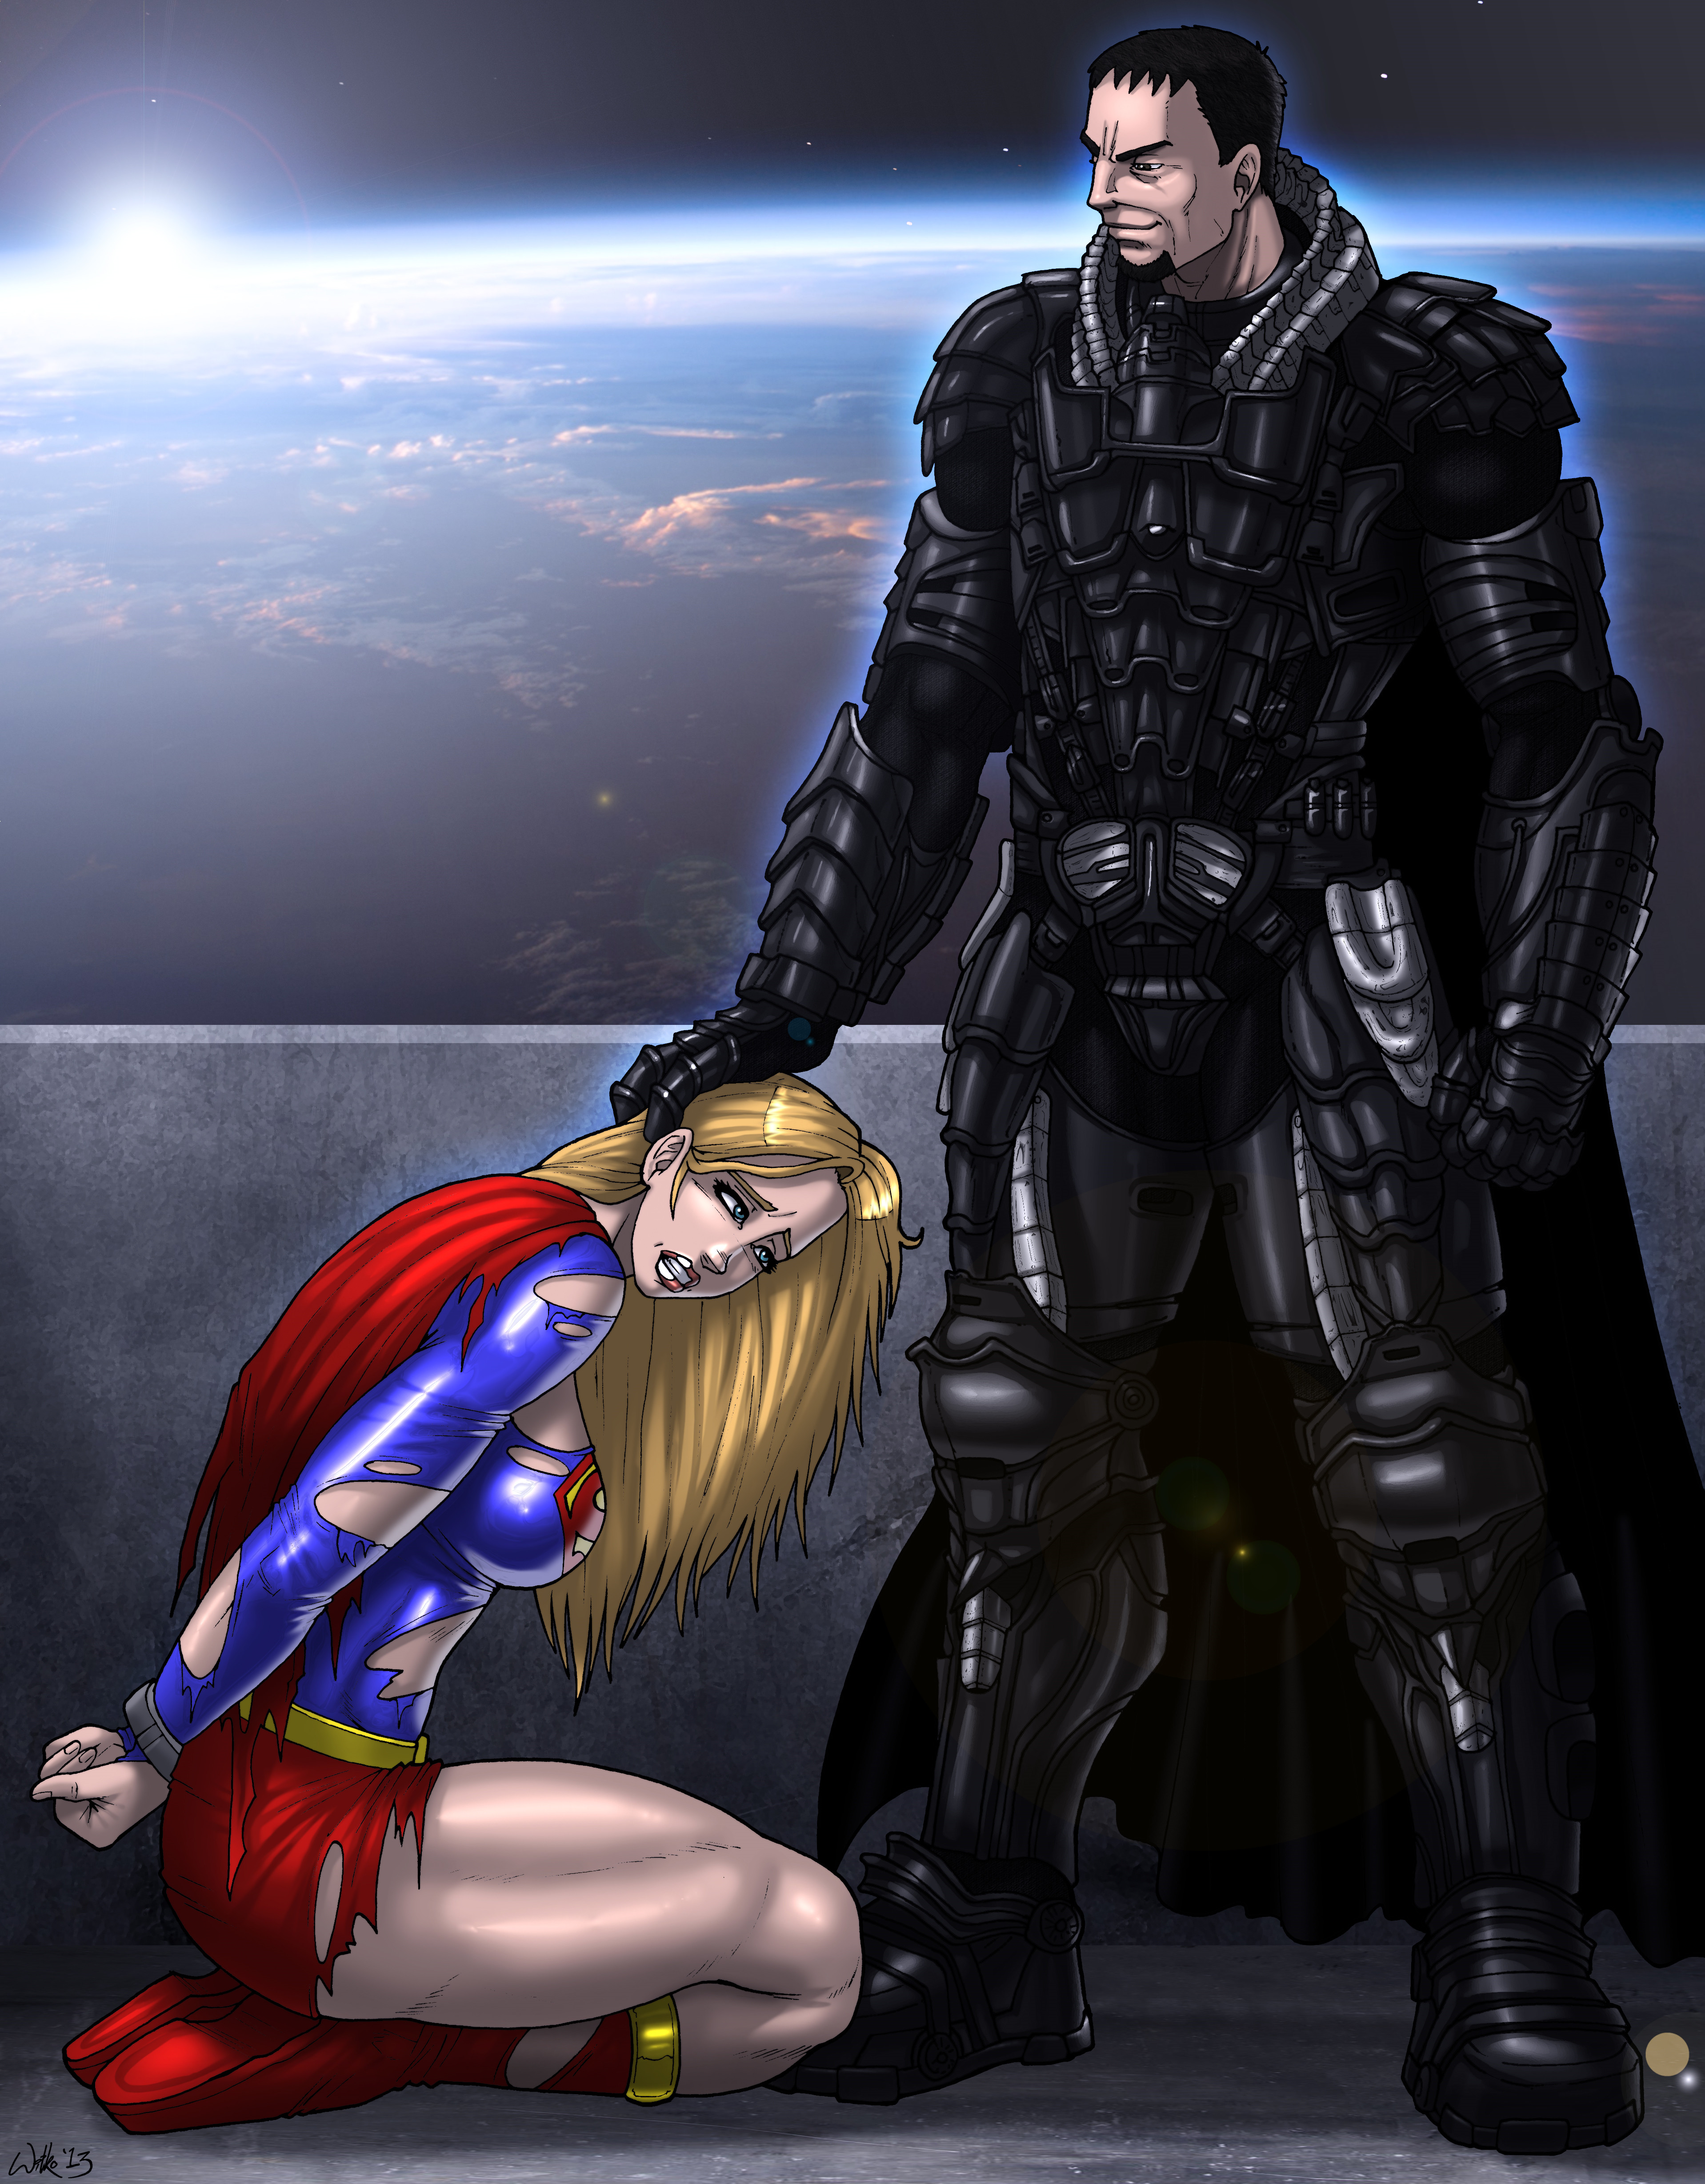 Kneel Before Zod 2 By Andrewr255 On DeviantArt.